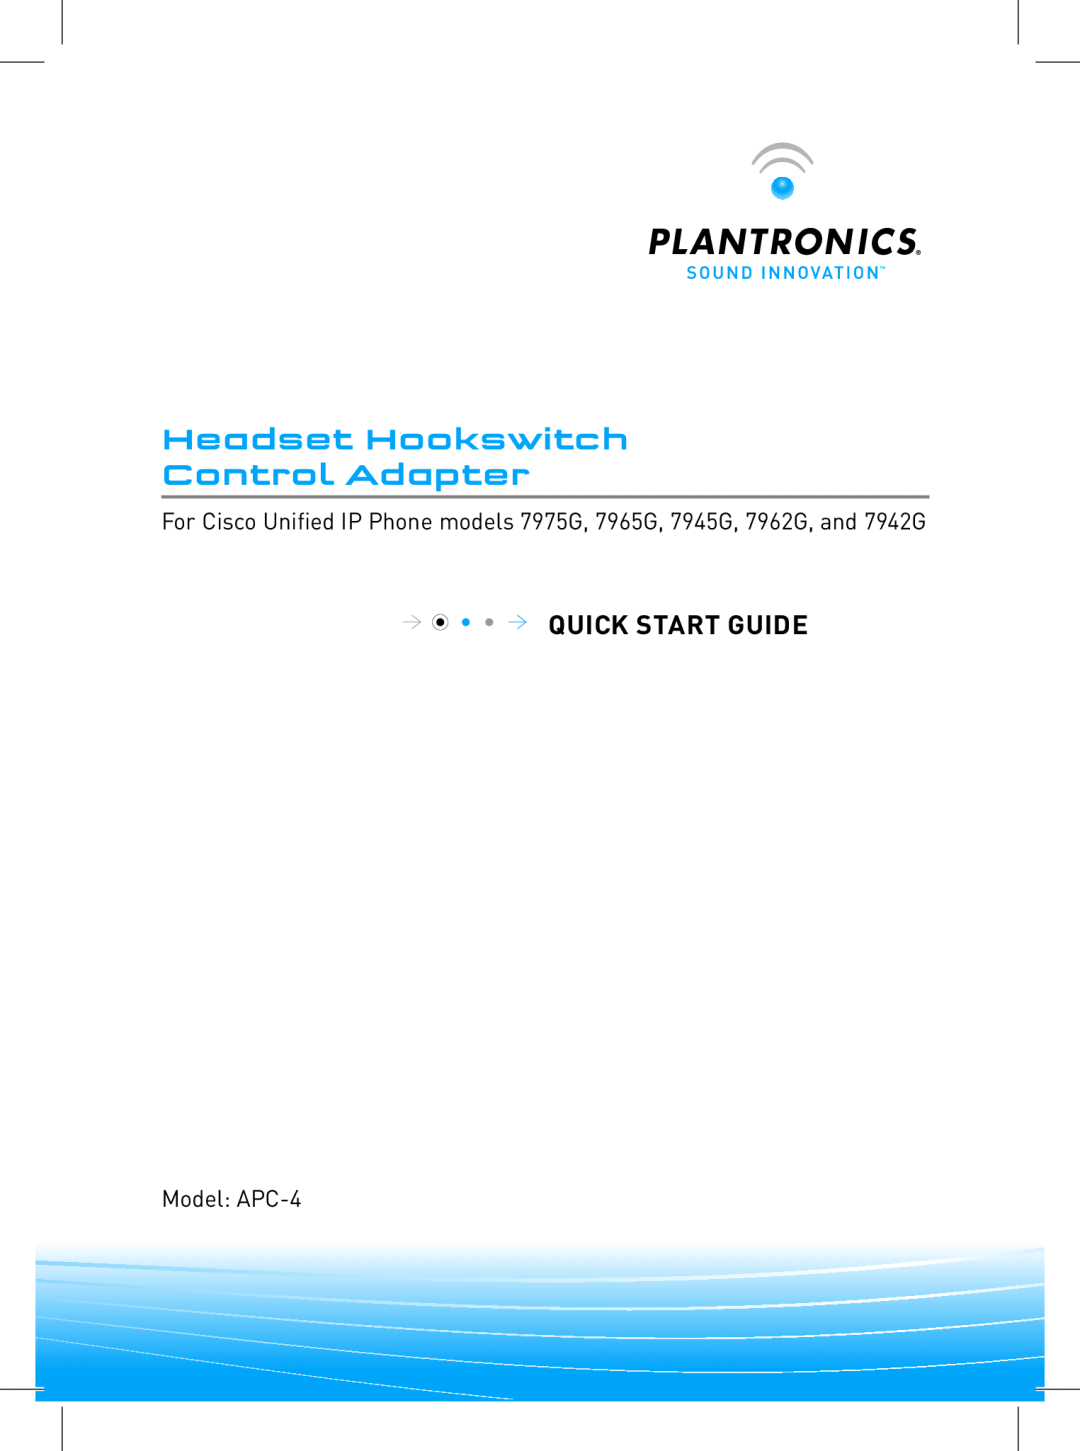 Plantronics quick start Headset Hookswitch Control Adapter, Quick Start Guide, Model APC-4 